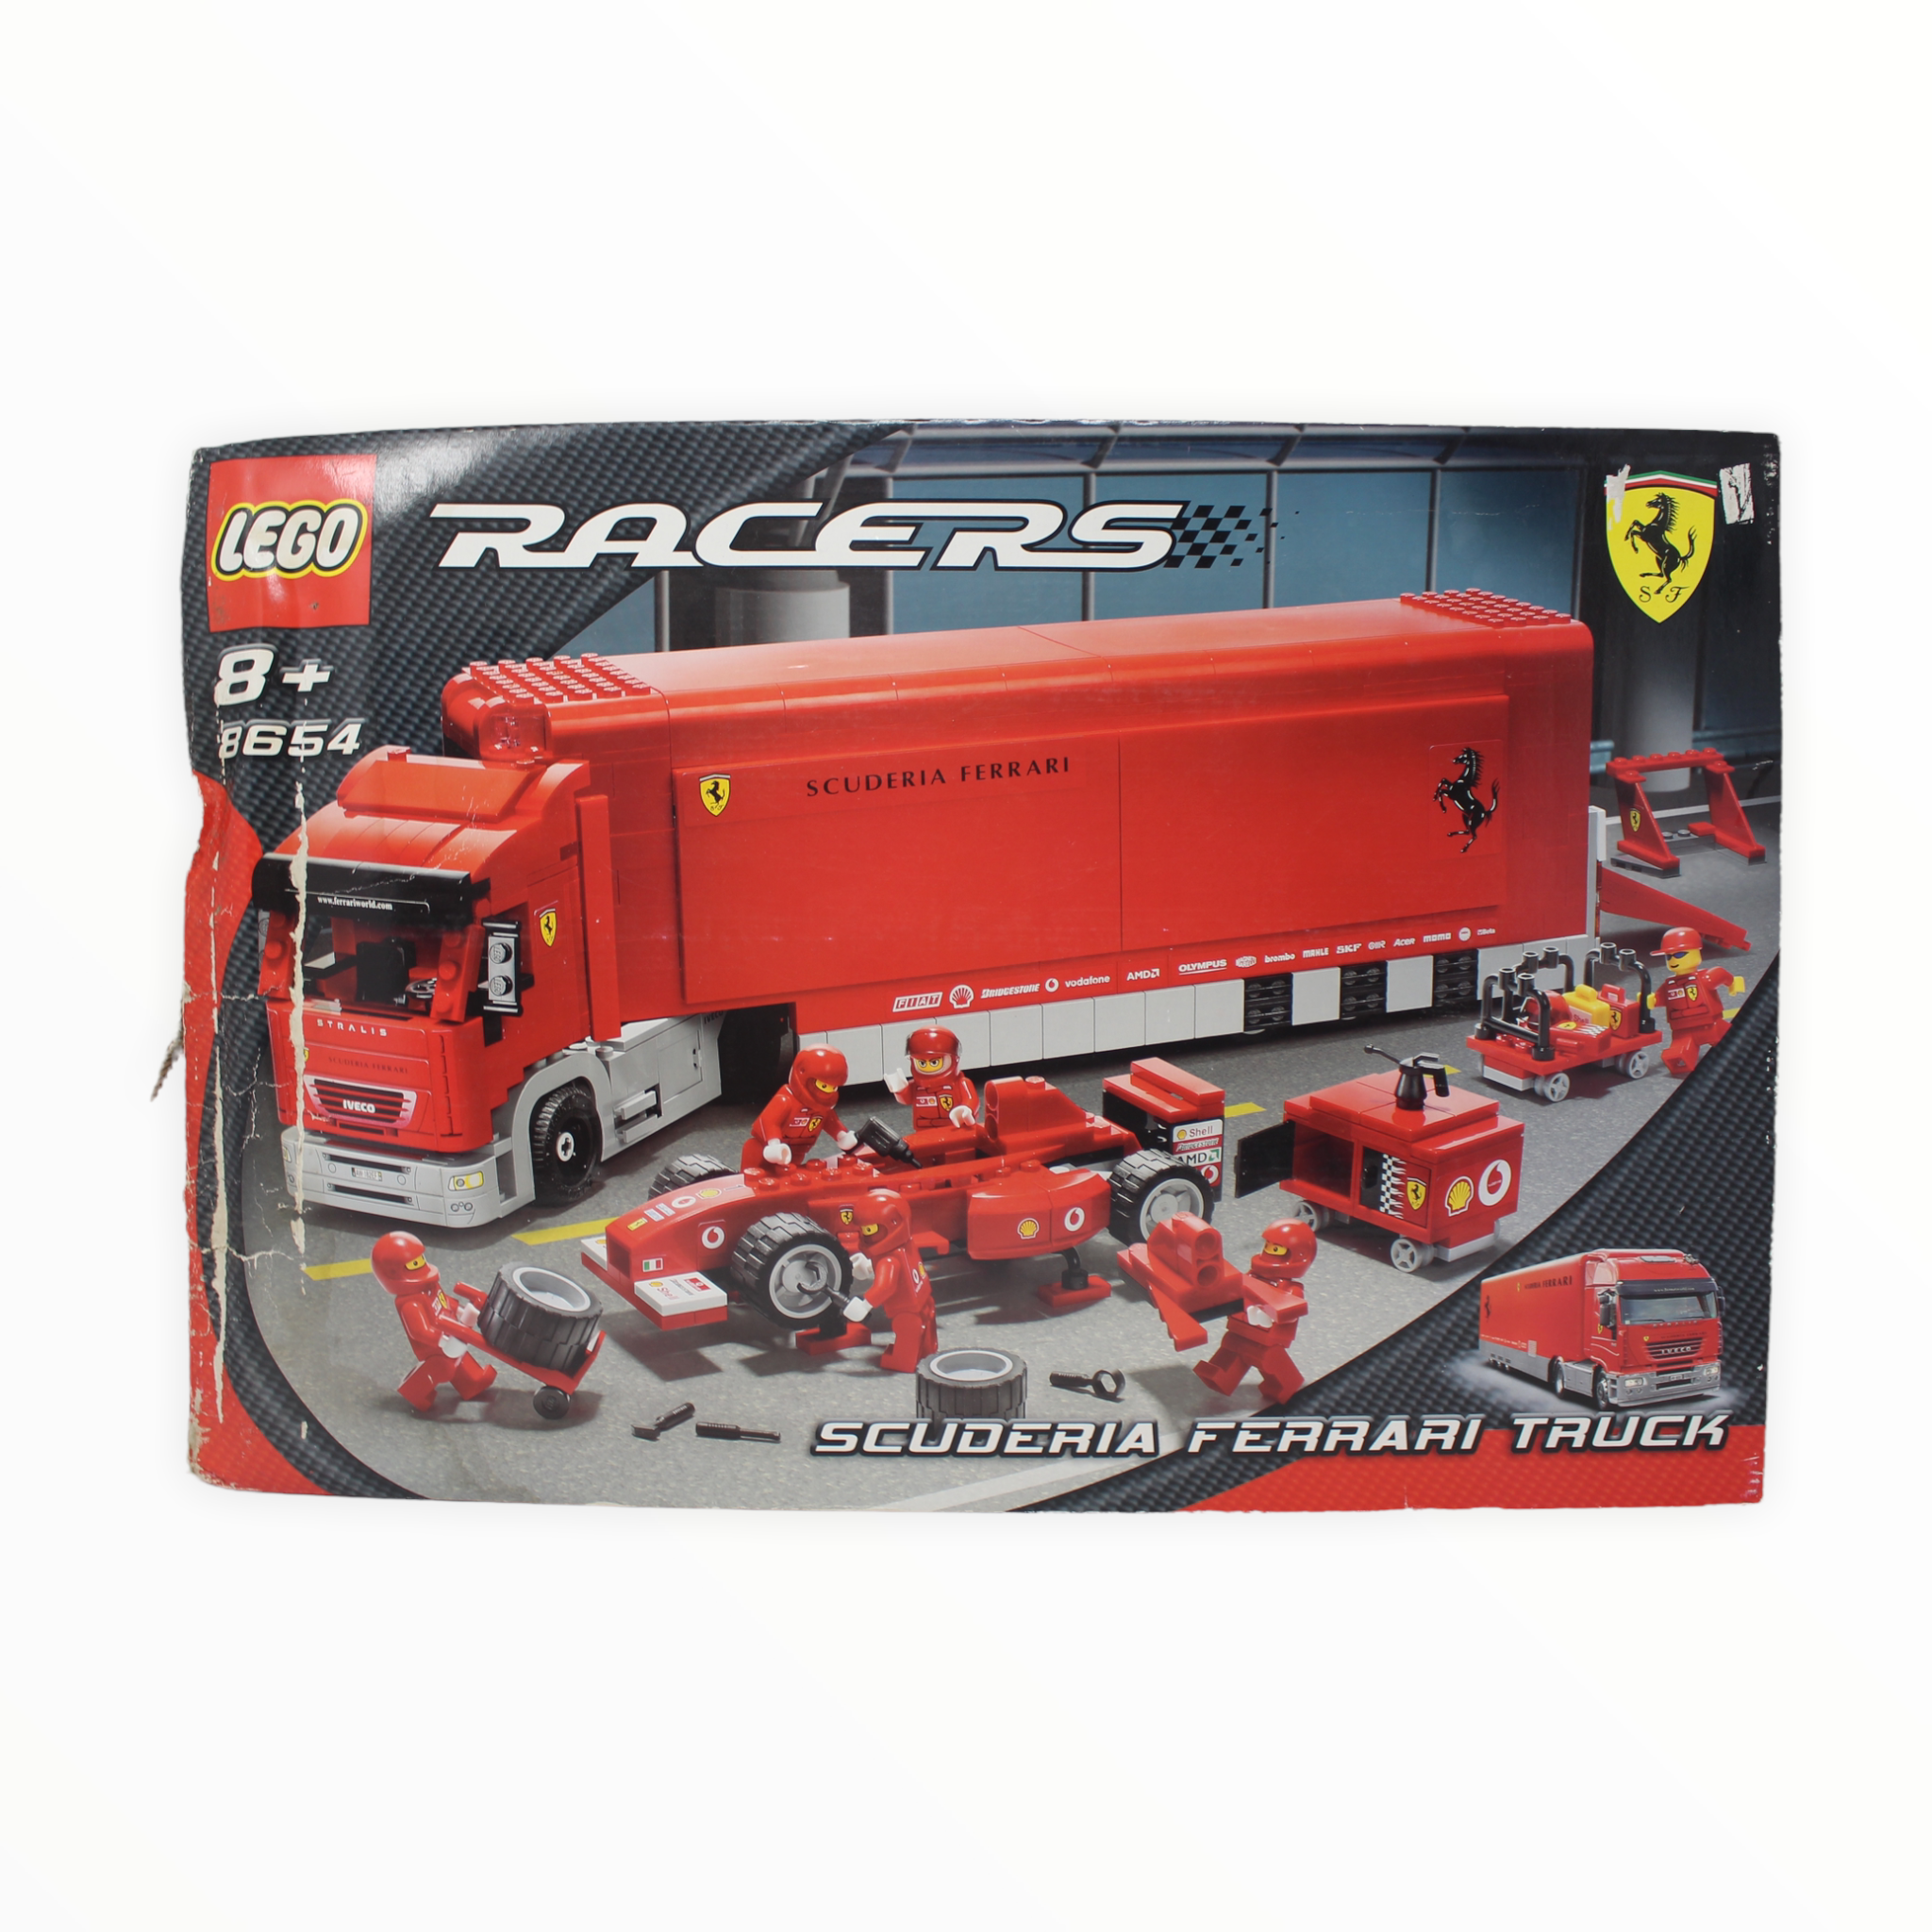 Certified Used Set 8654 LEGO Racers Scuderia Ferrari Truck